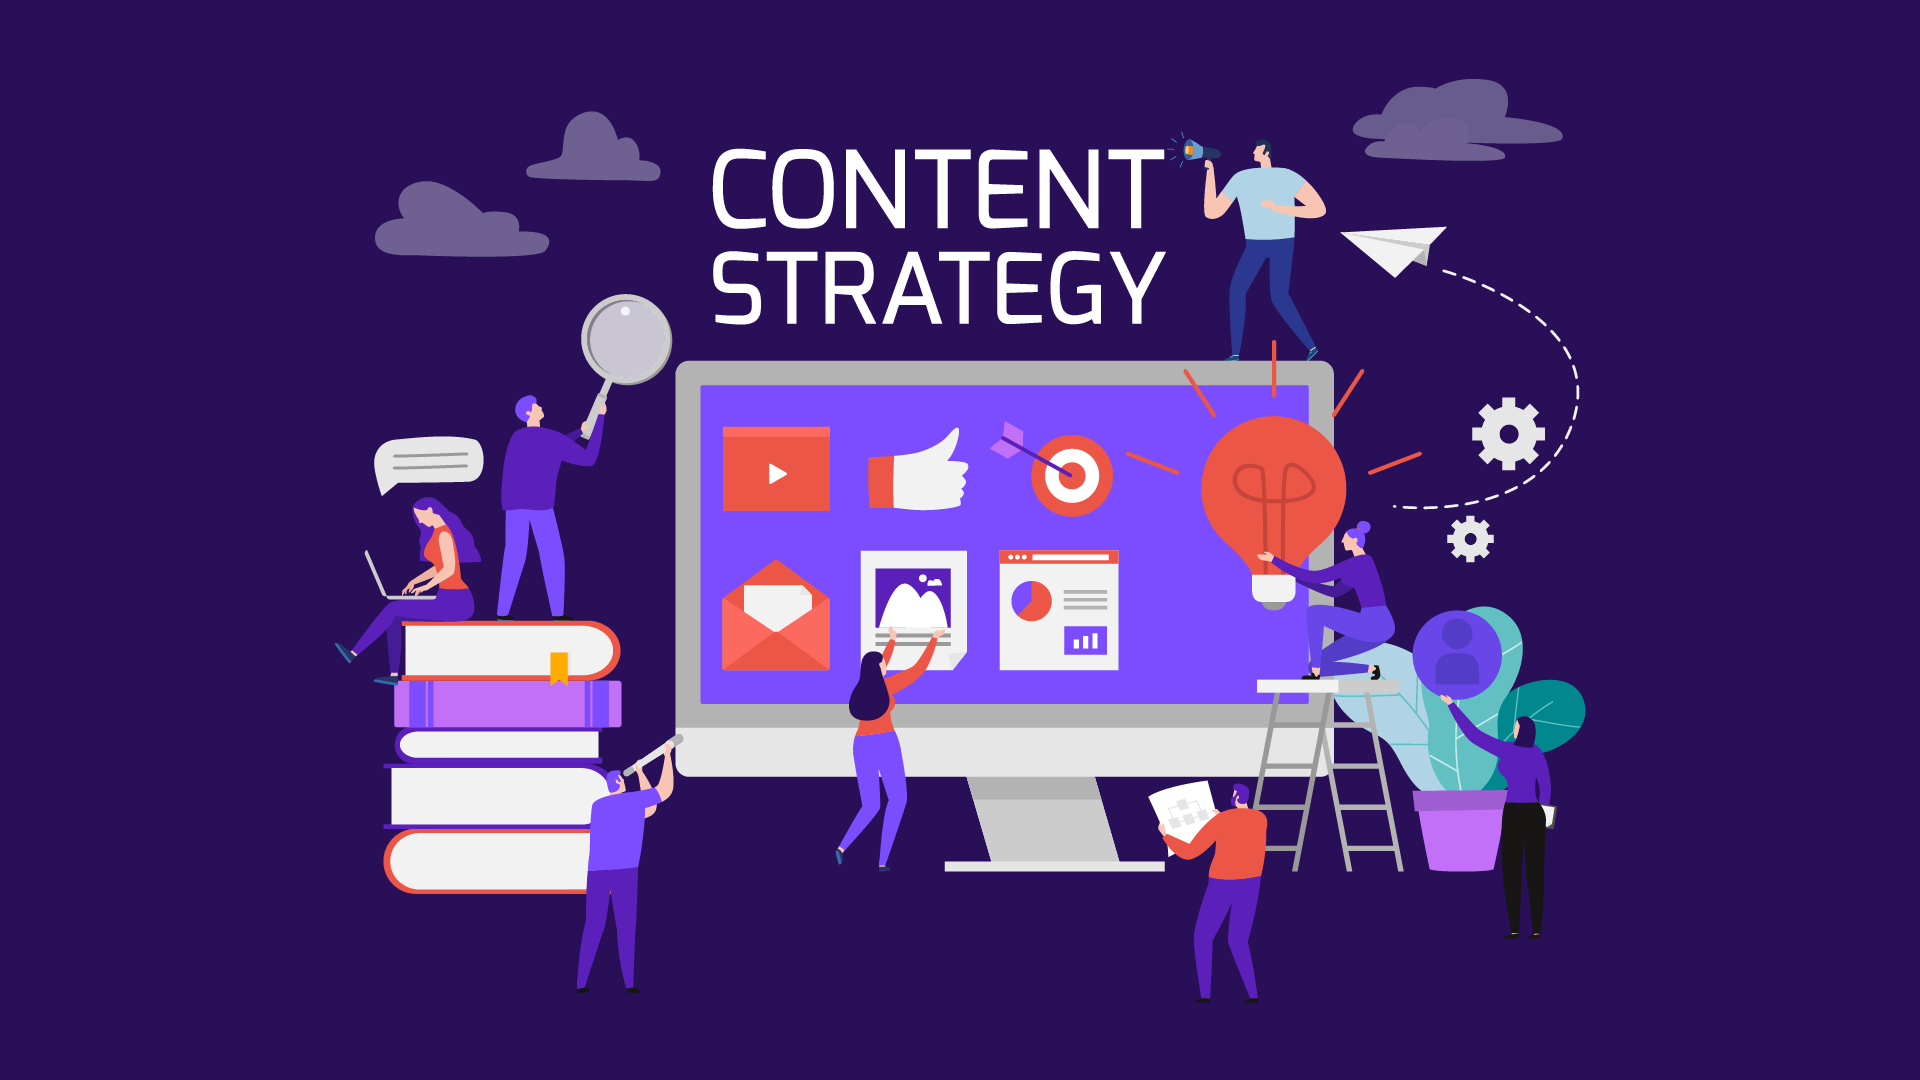 CS_-_Omni_Content_Strategy_-_Blog_Post_(002).png